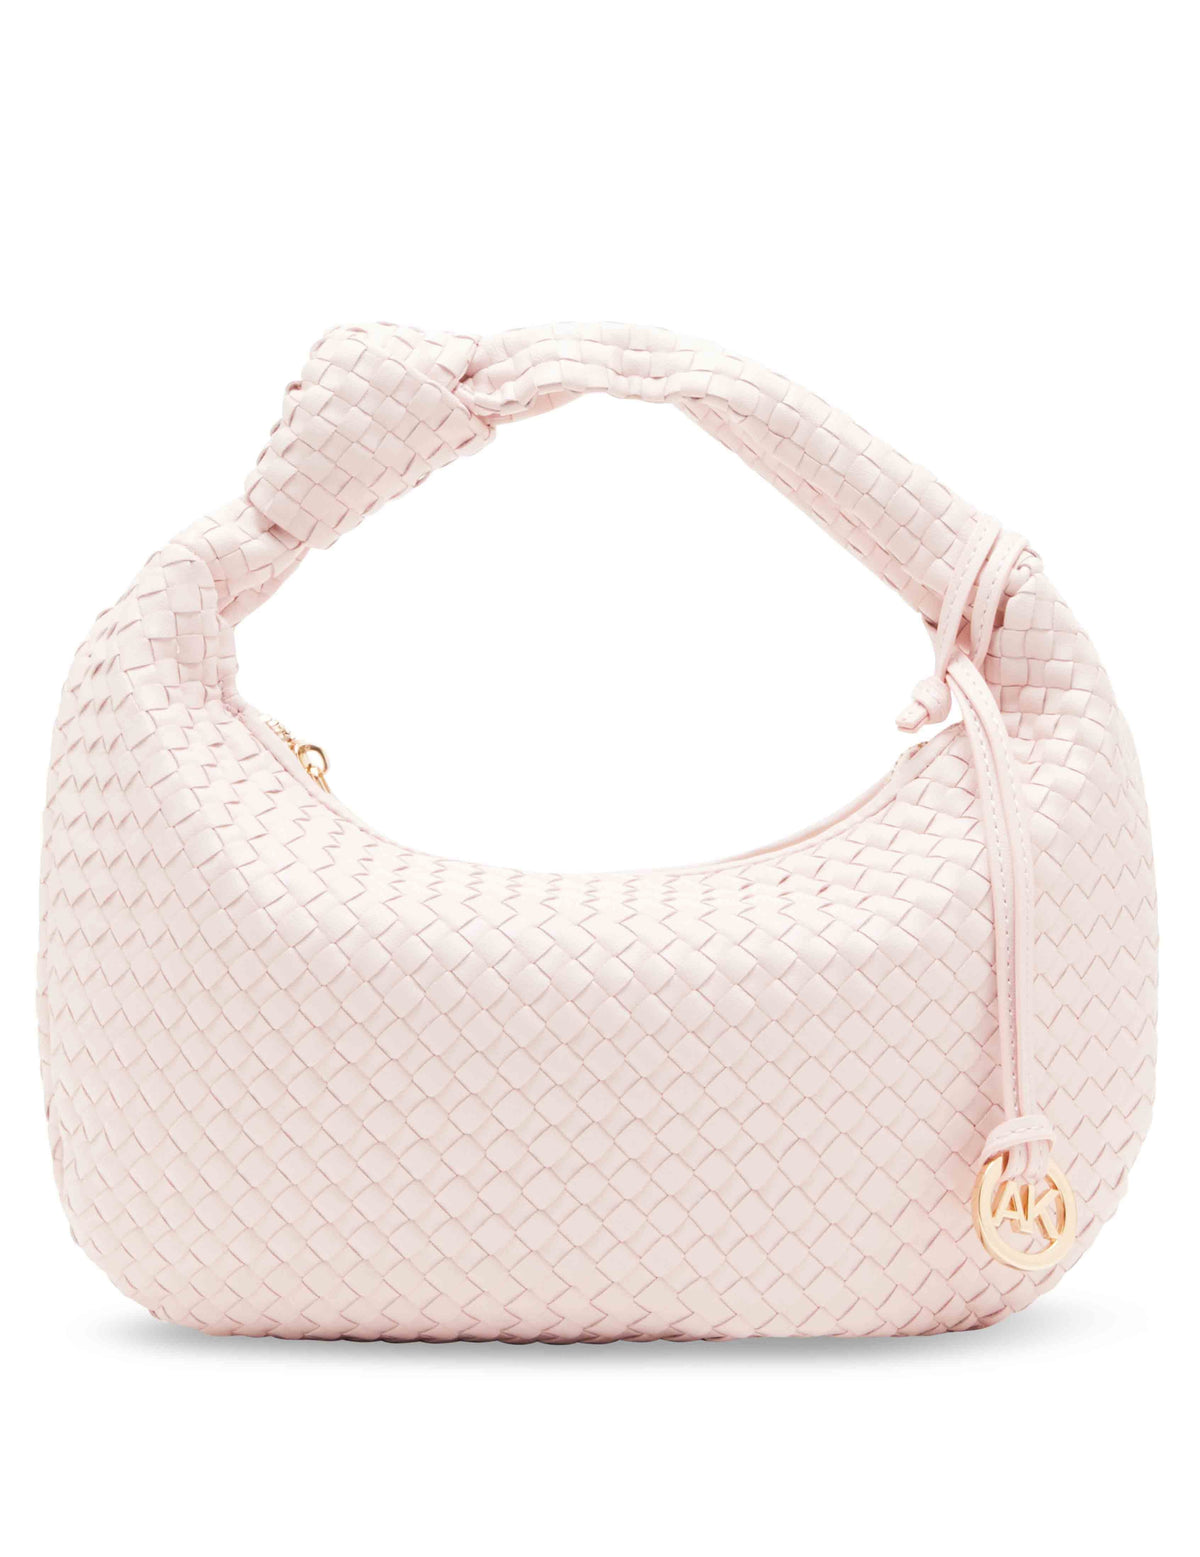 Anne Klein Petal Mini Woven Shoulder Bag